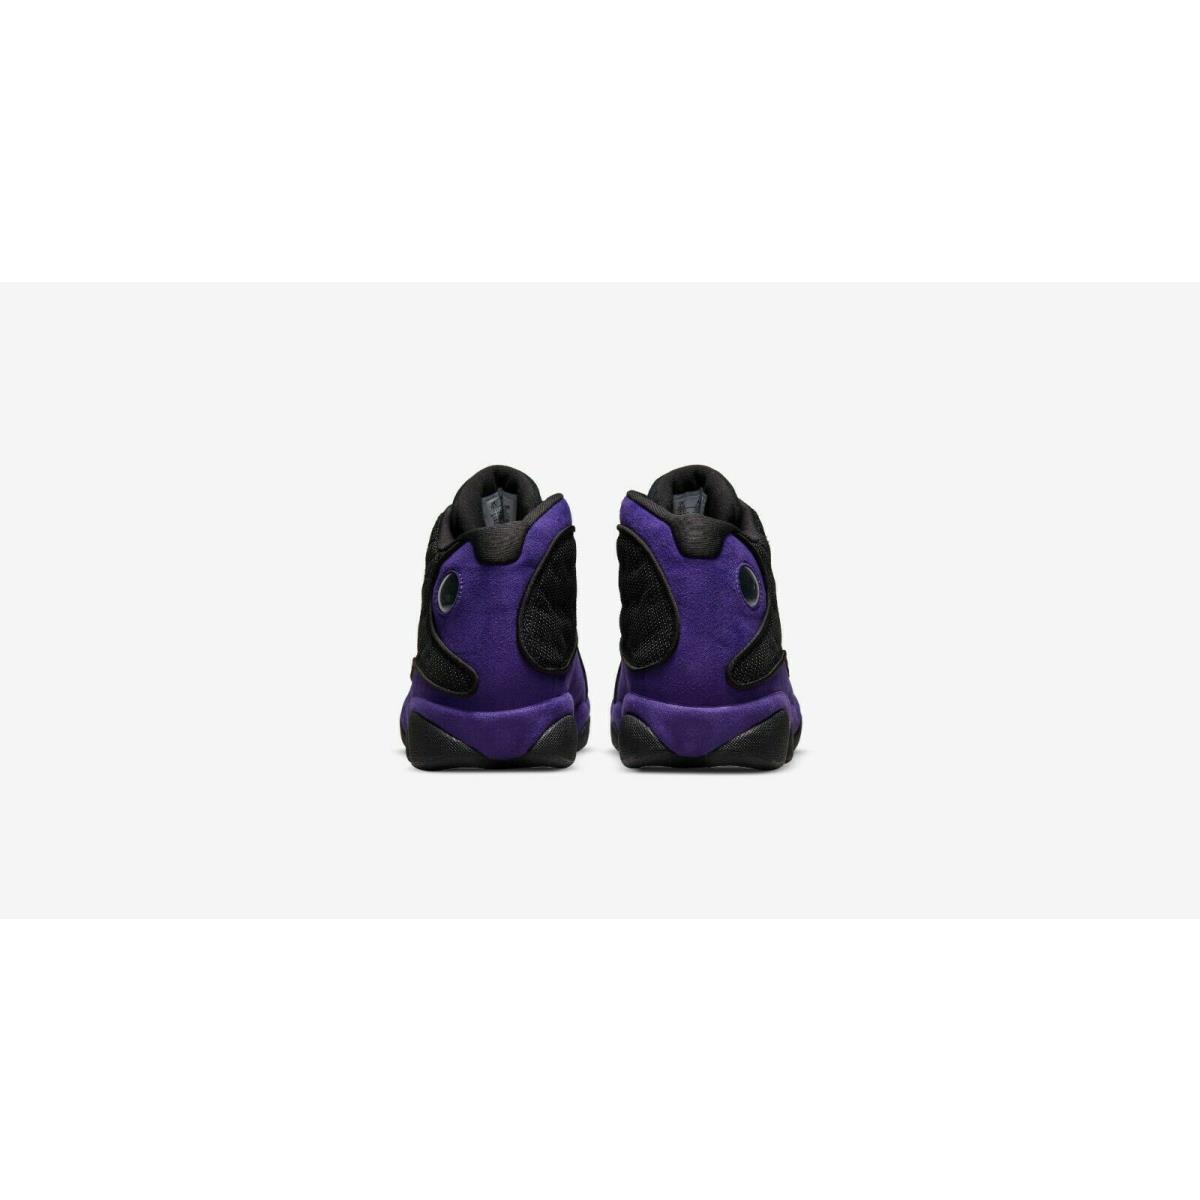 Nike shoes Air Retro - Black/Court Purple 4